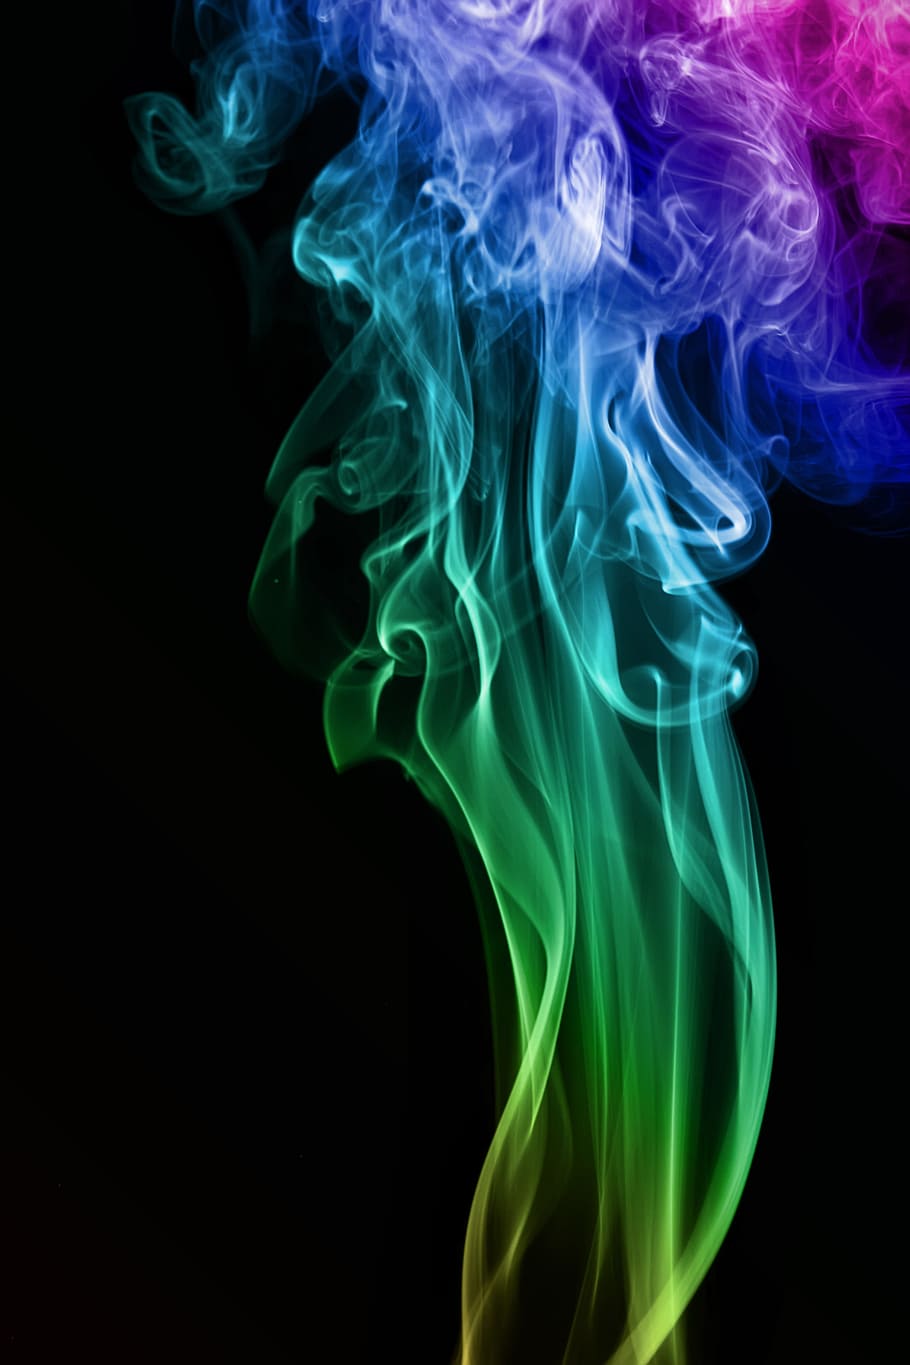 resumen, aroma, aromaterapia, fondo, color, olor, humo, humo - estructura física, foto de estudio, fondo negro